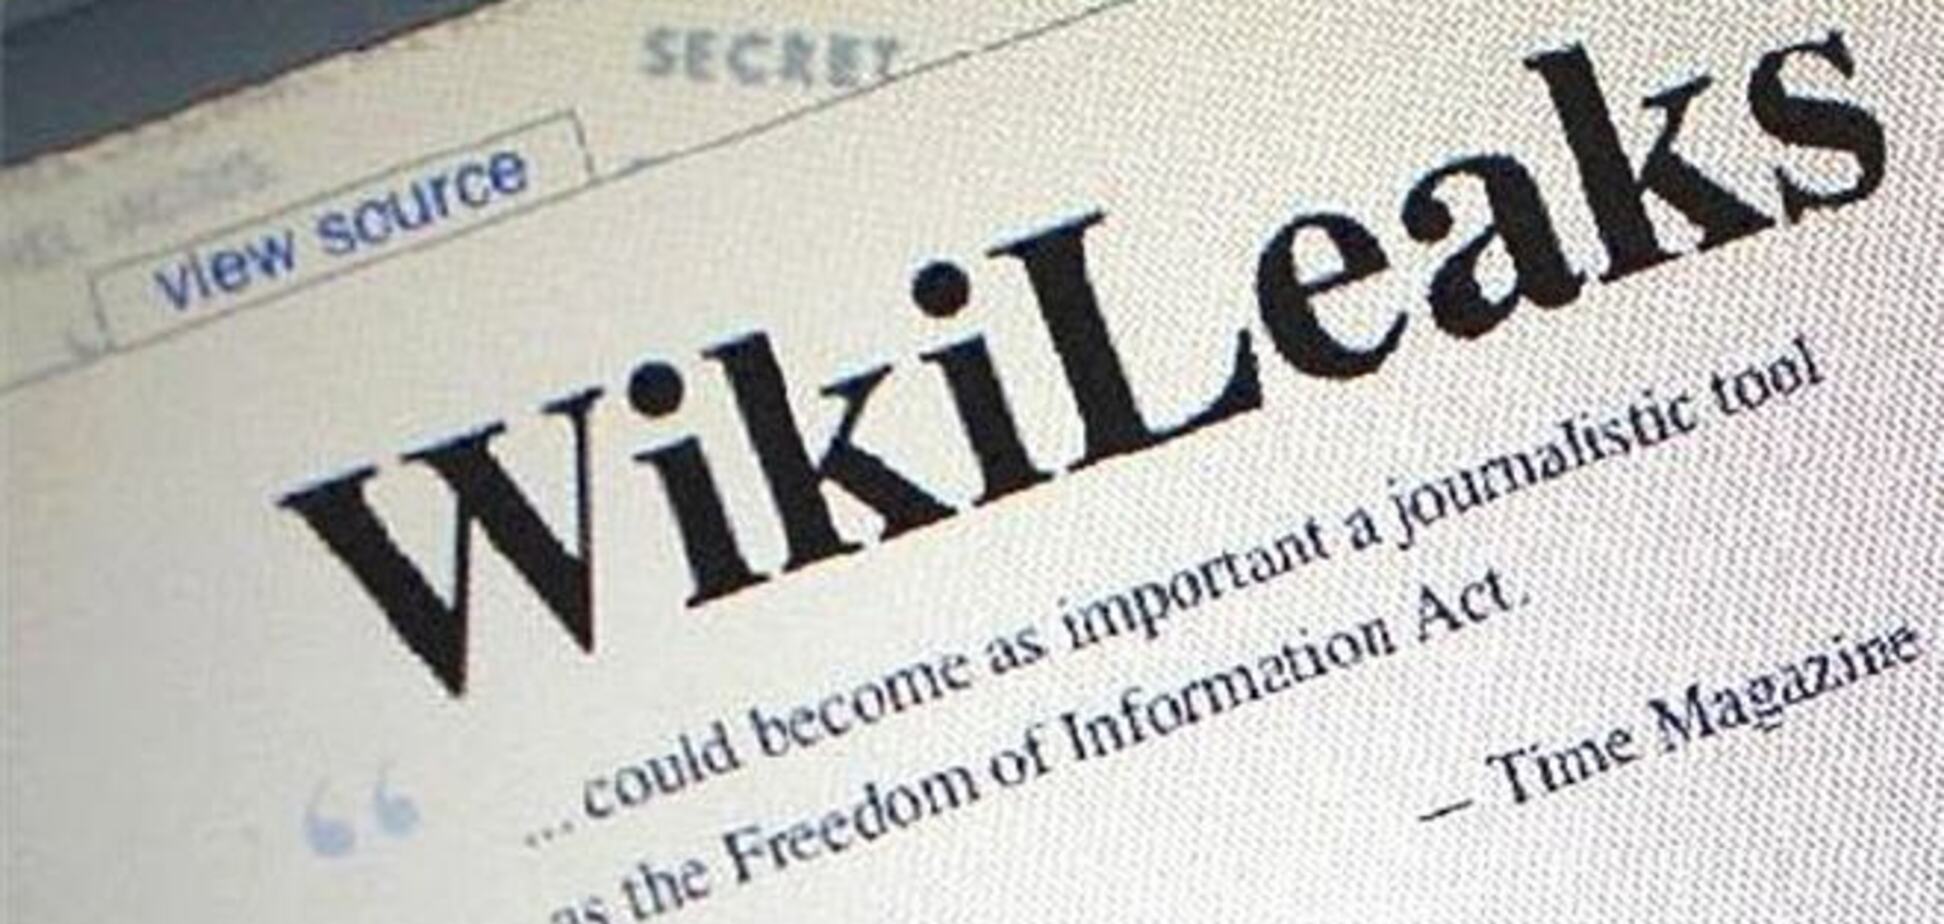 WikiLeaks злив чергову порцію компромату через Russia Today